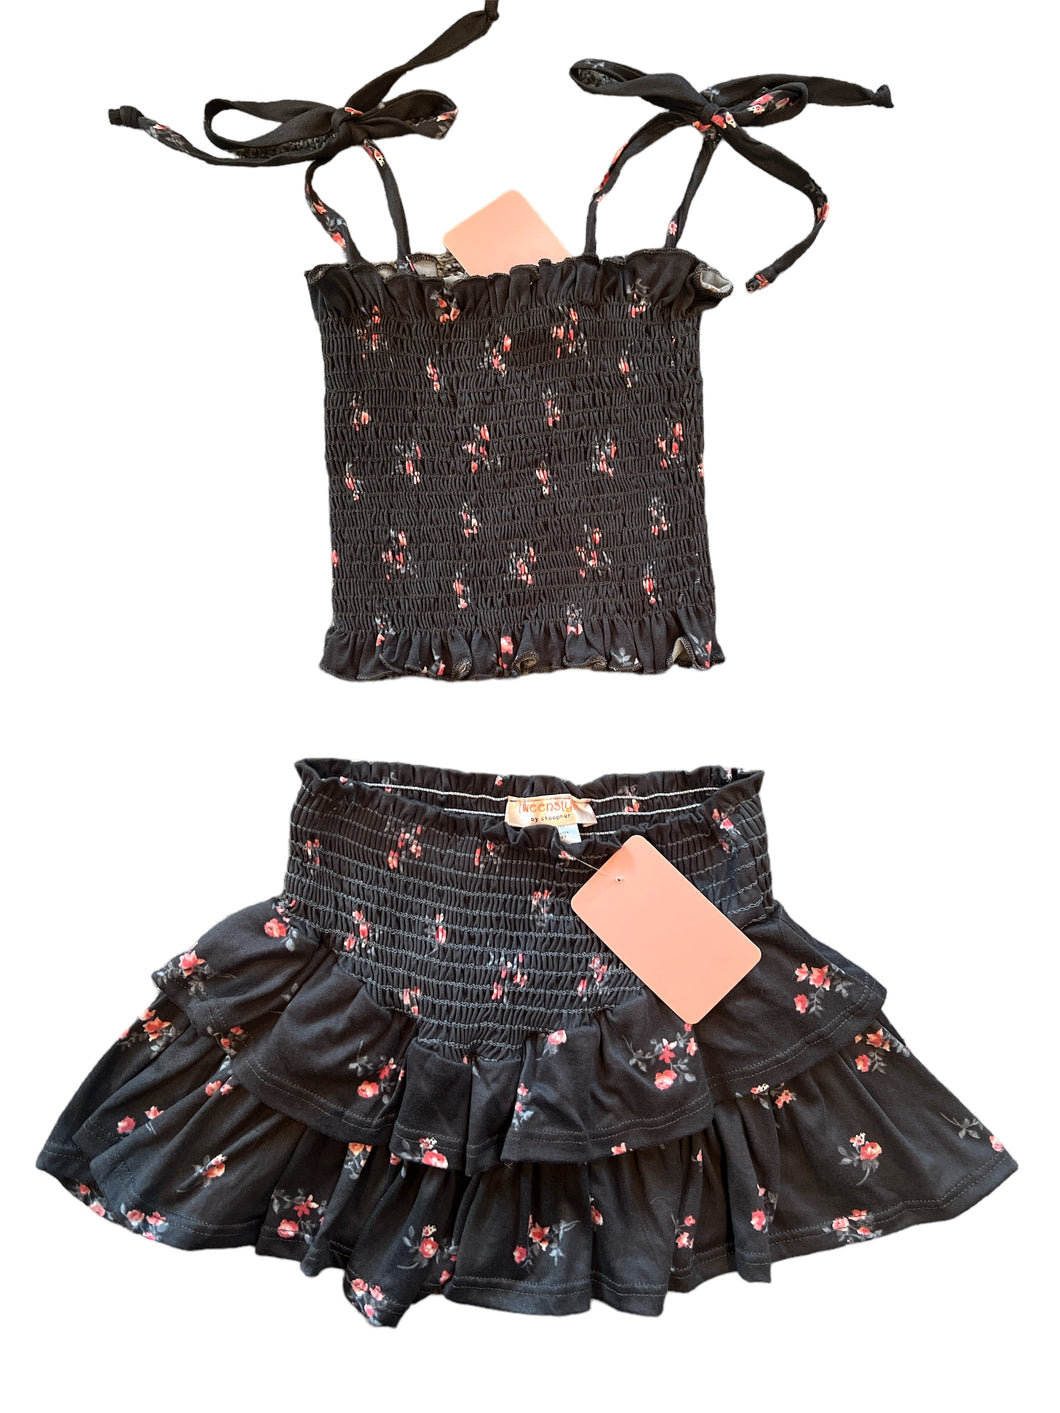 Tweenstyle By Stoopher girls 2pc floral smocked crop tank & mini skirt set 4 NEW